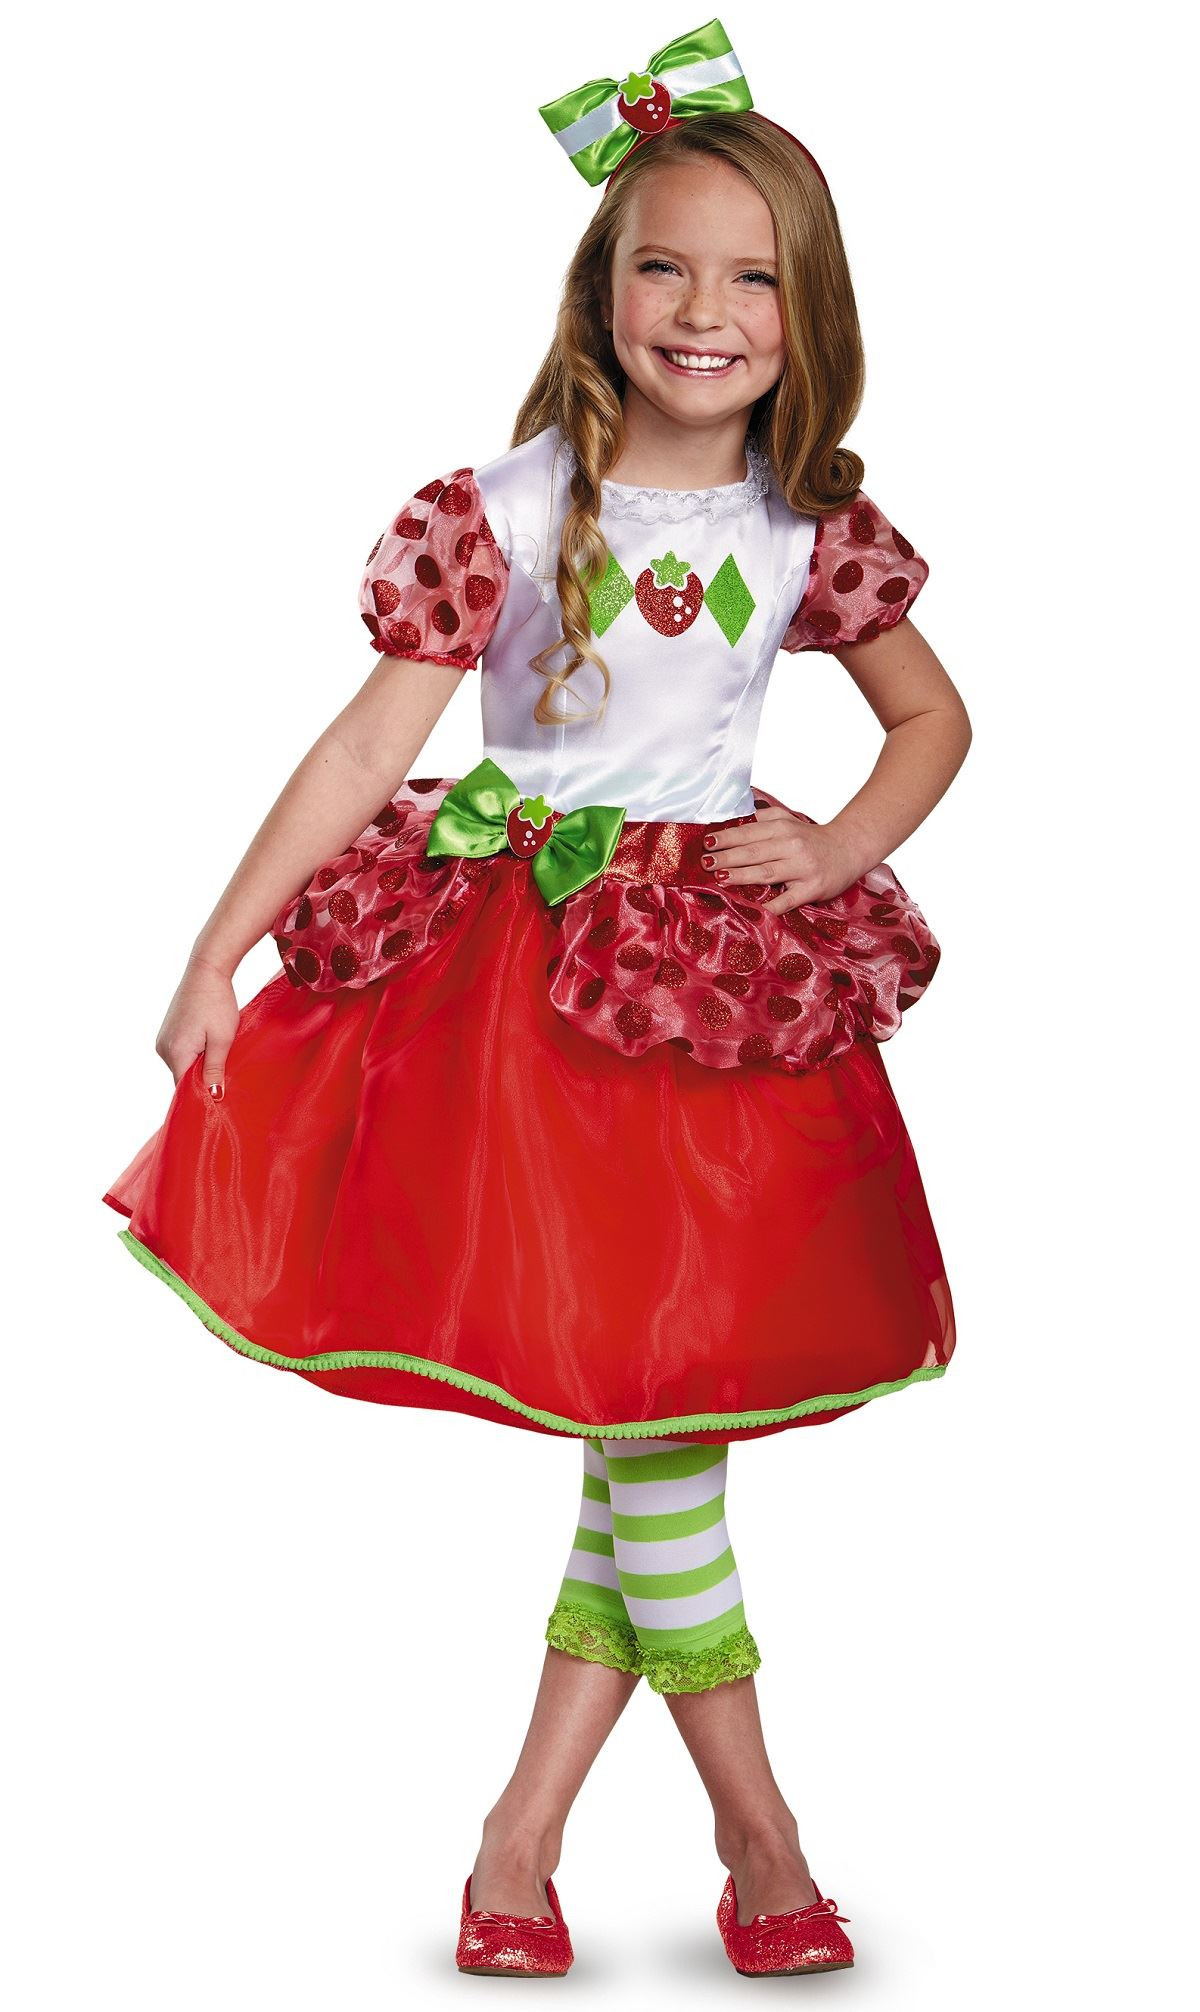 Strawberry Shortcake Halloween Costumes
 Kids Strawberry Shortcake Girls Costume $37 99